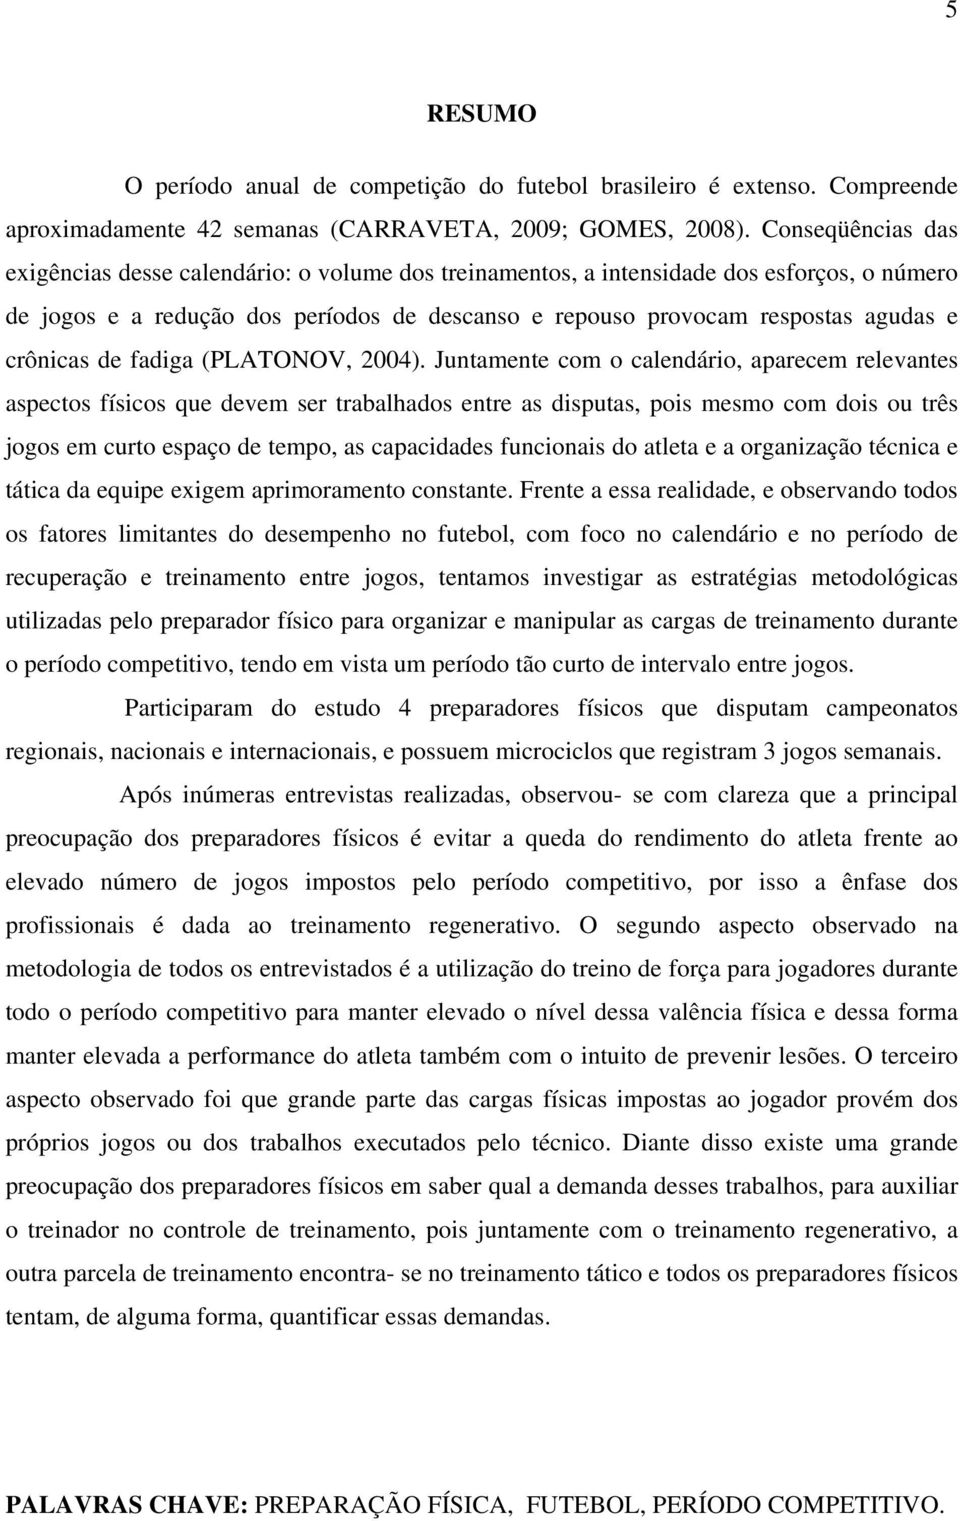 crônicas de fadiga (PLATONOV, 2004).